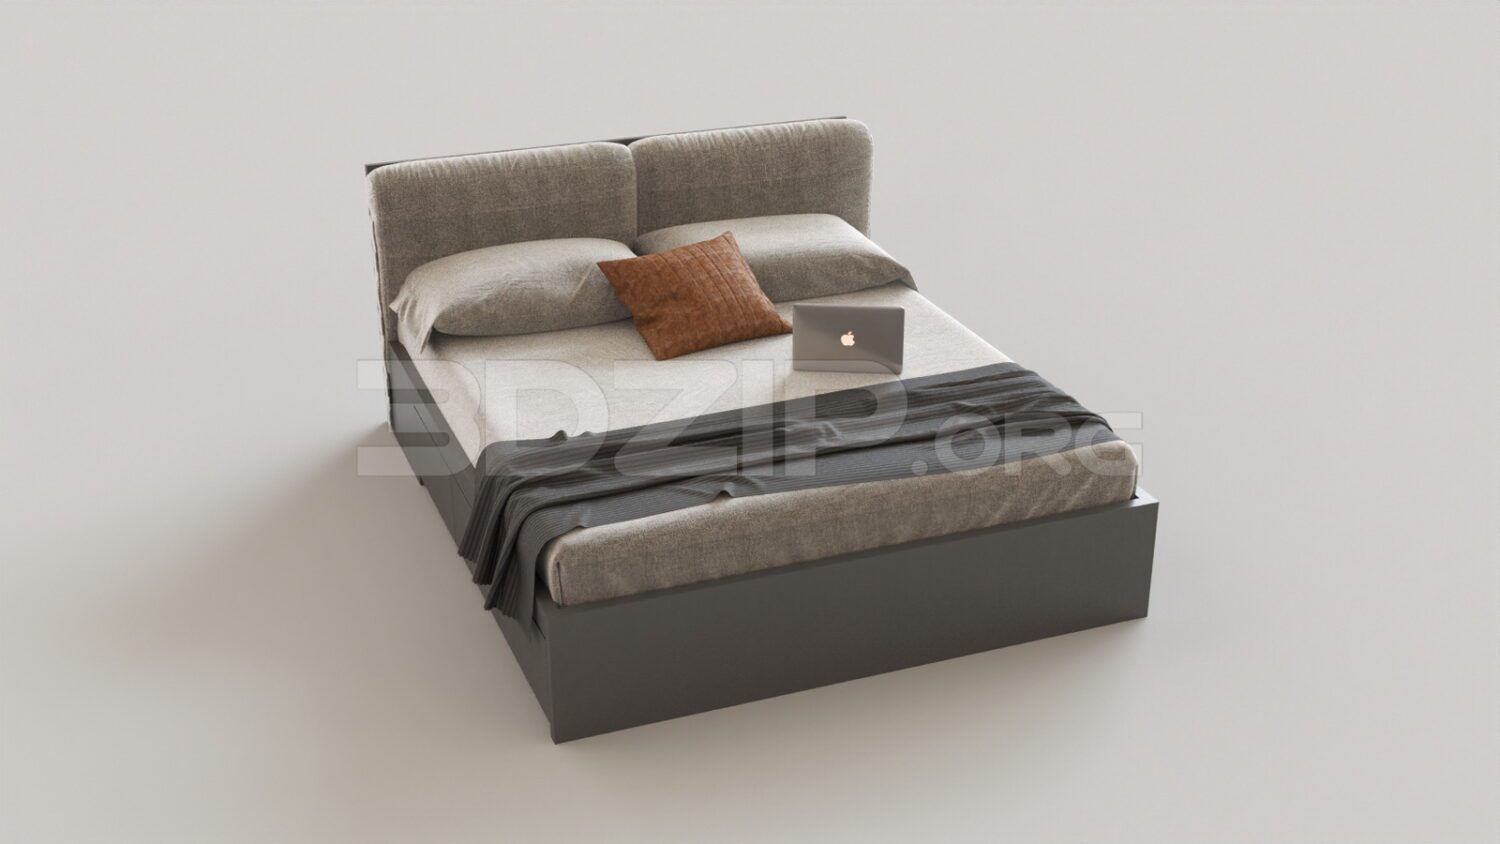 4970. Free 3D Bed Model Download